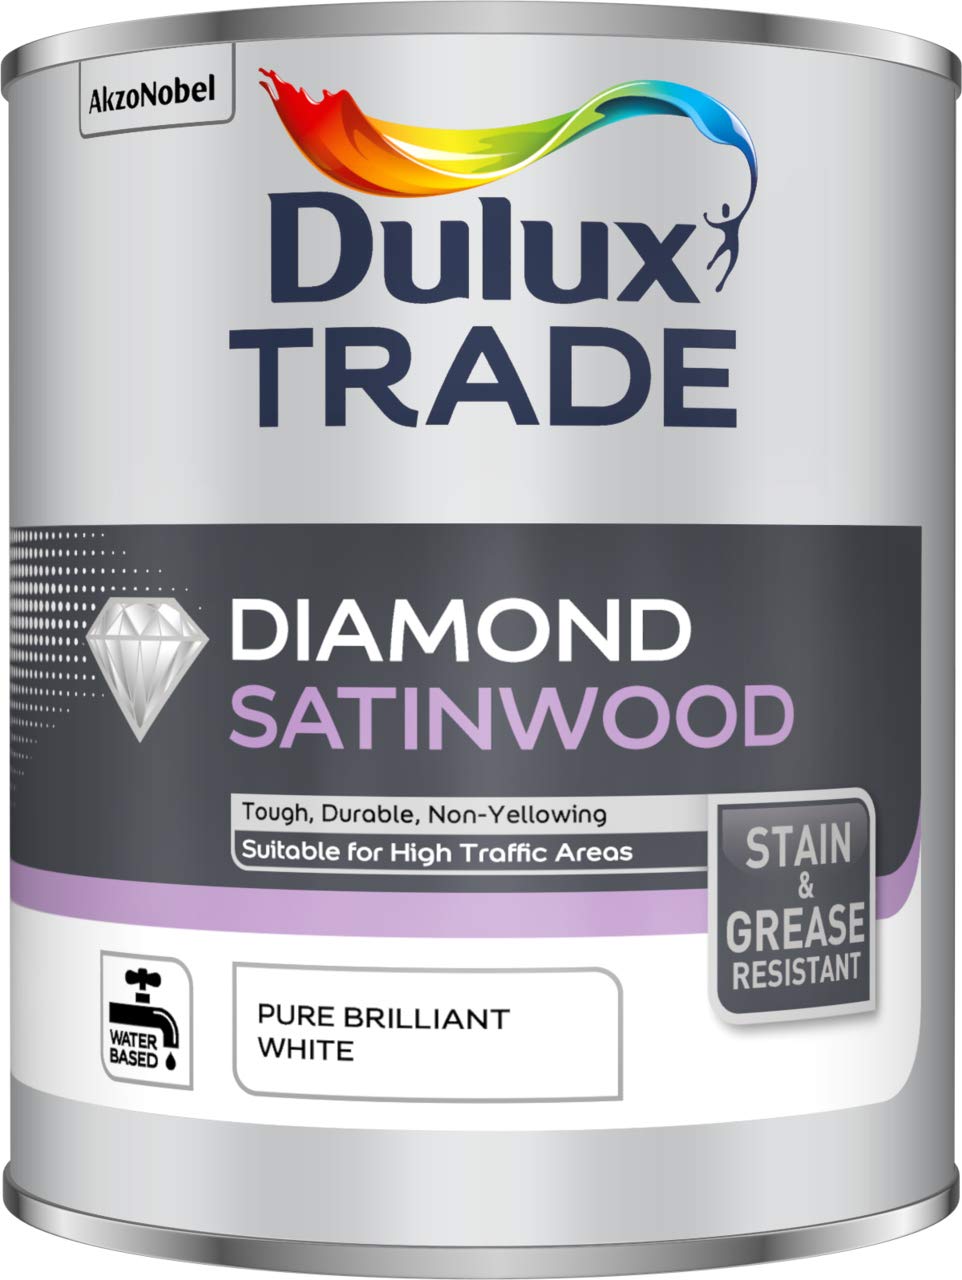 dulux diamond trade satinwood